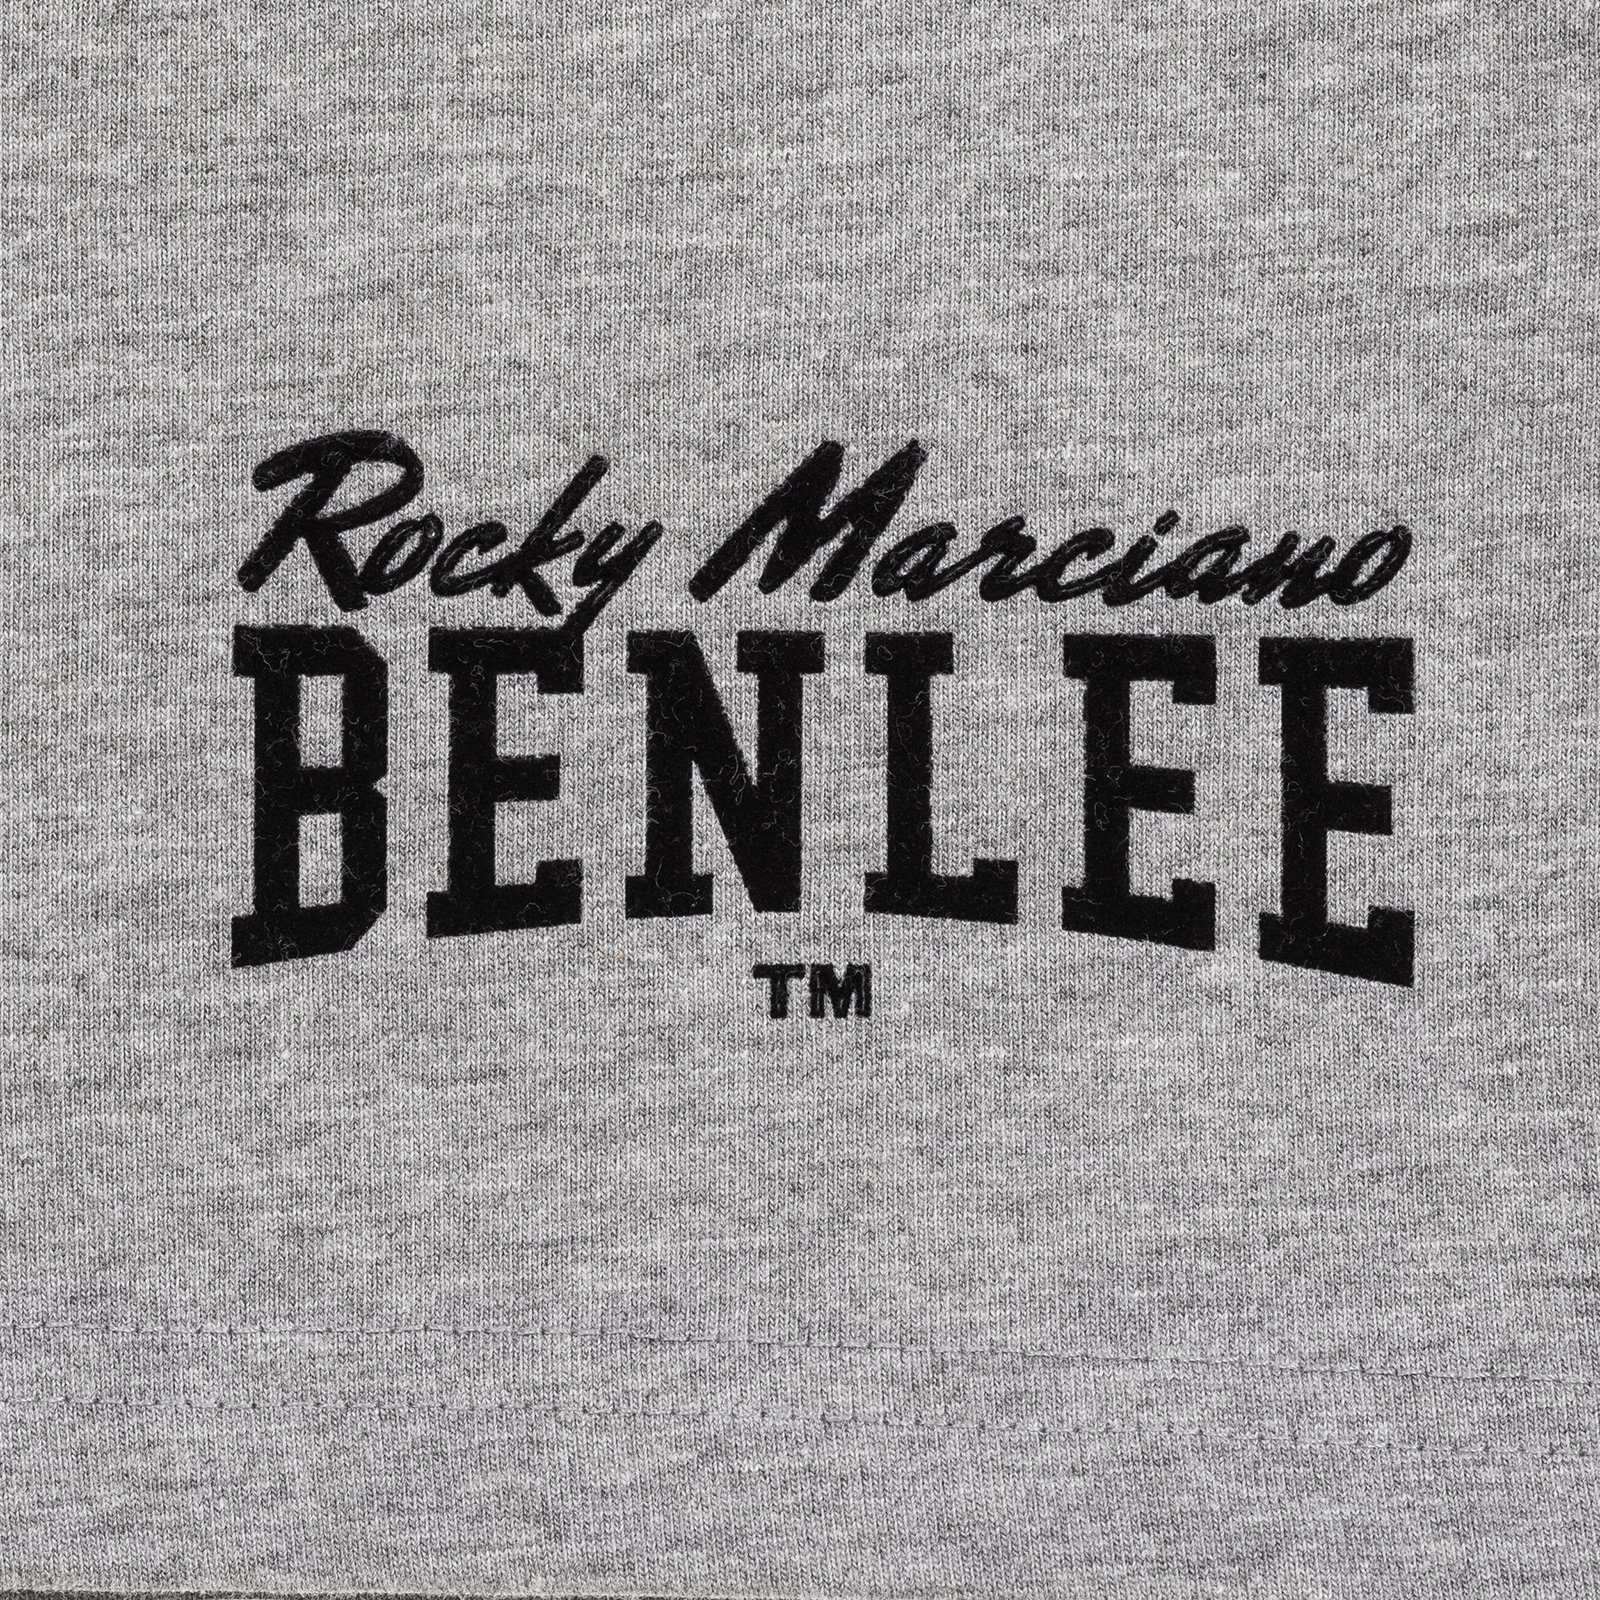 Benlee Rocky Marciano Sweatshorts BASIC Marl Grey